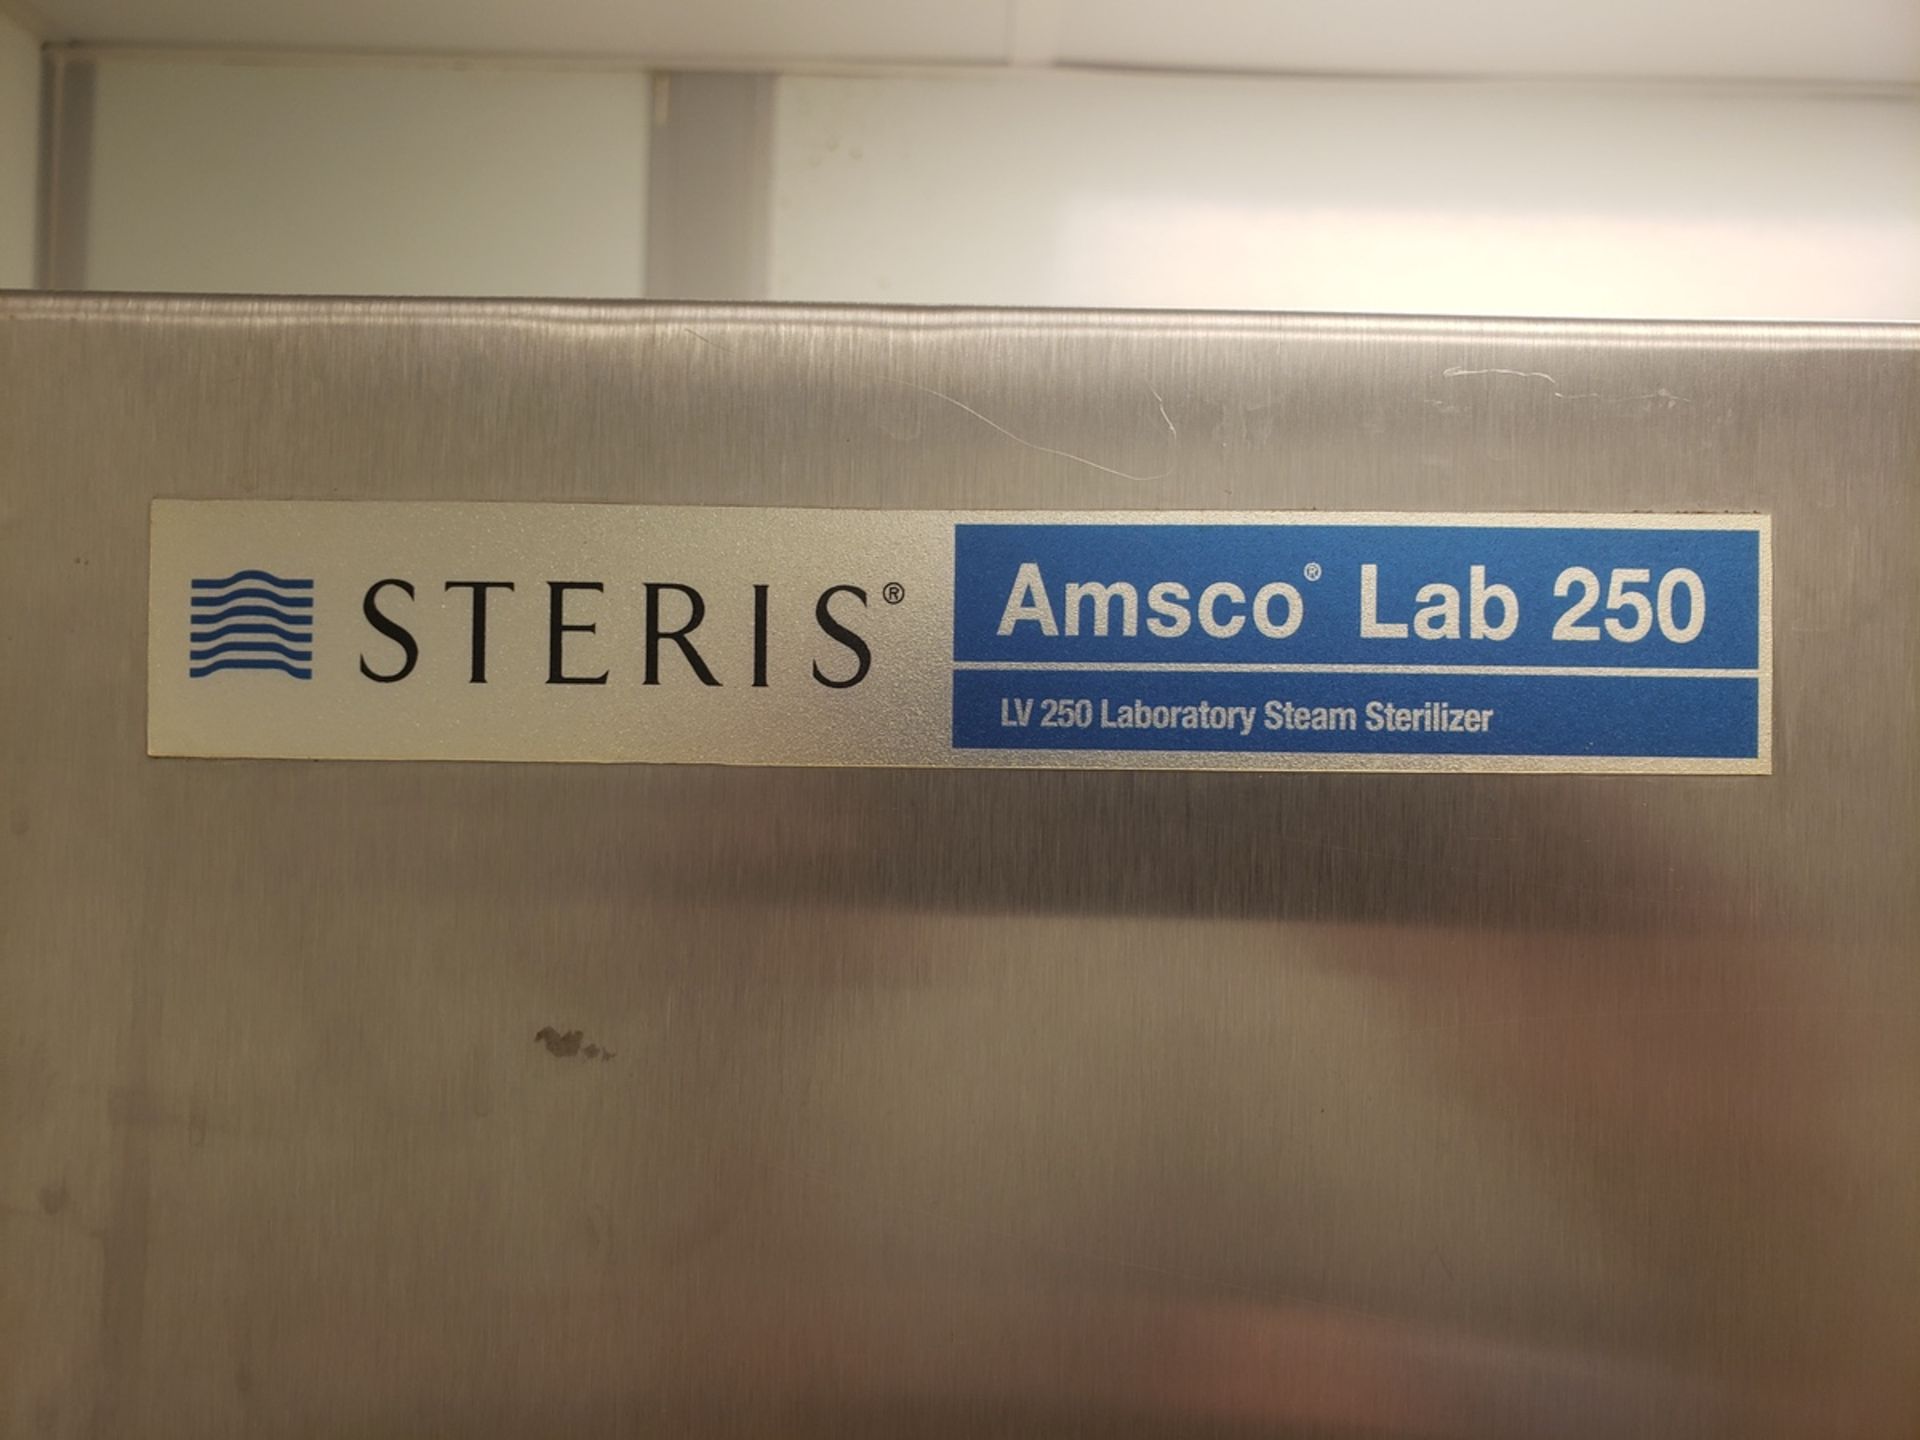 Steris Amsco Lab 250 LV 250 Laboratory Steam Sterilizer - Image 3 of 3